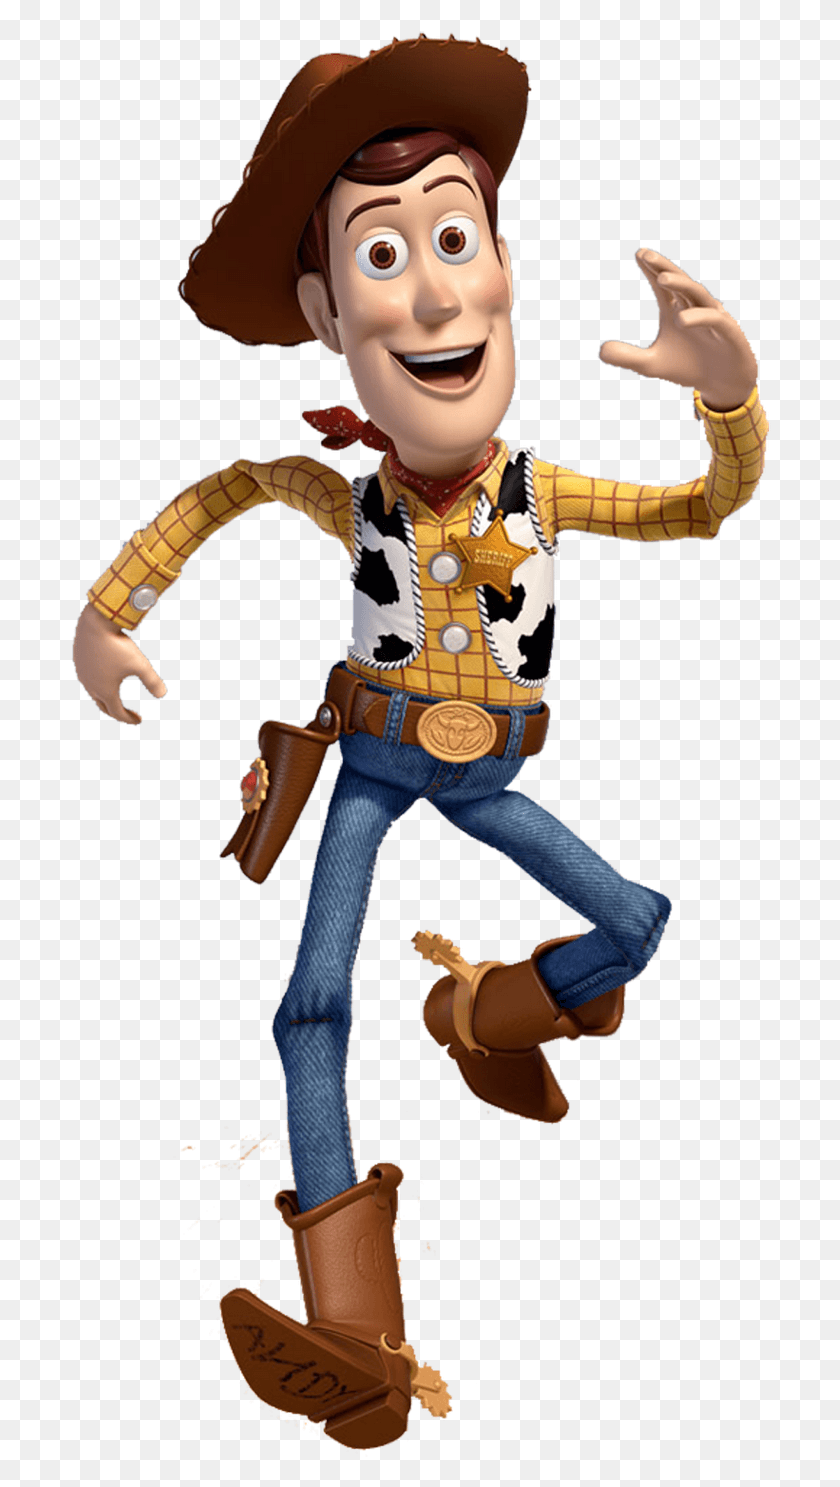 702x1427 Descargar Pnggifs Y Fondos Pazenlatormenta Woody Toy Story Personajes, Muñeca, Juguete, Persona Hd Png